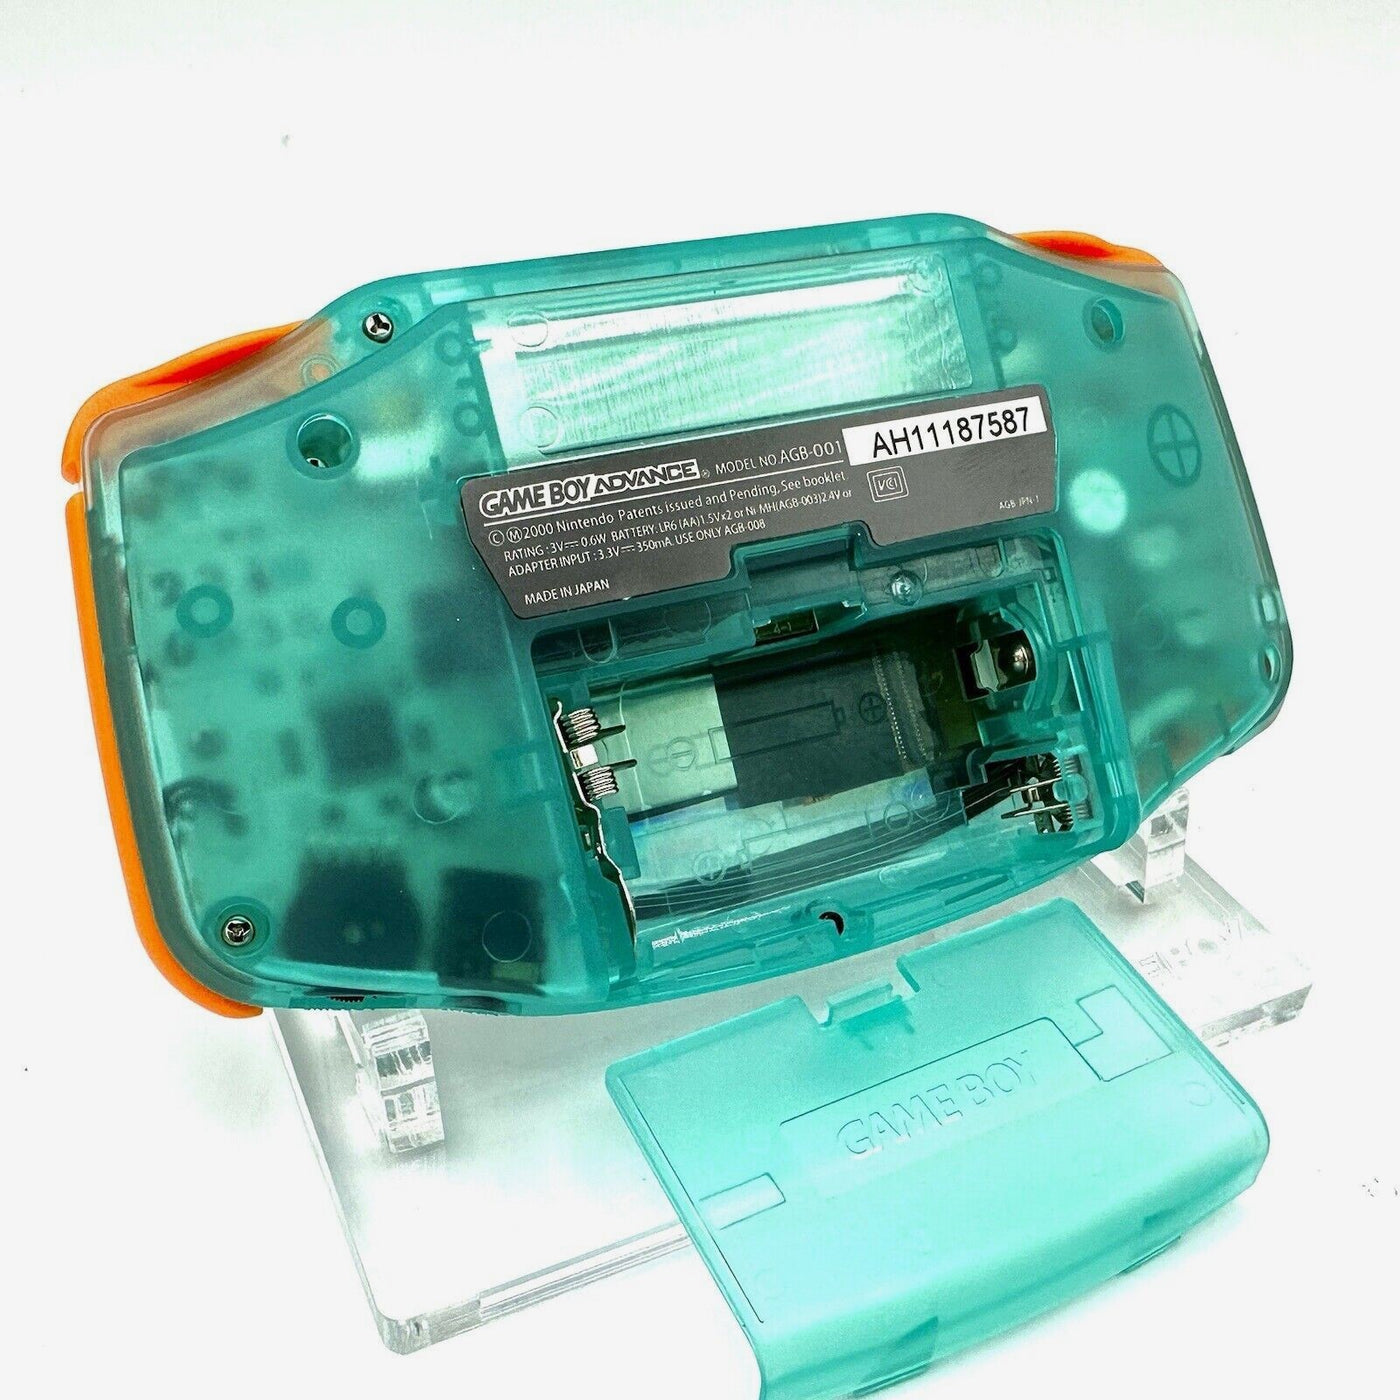 Game Boy Advance IPS V2 Console - Teal & Orange